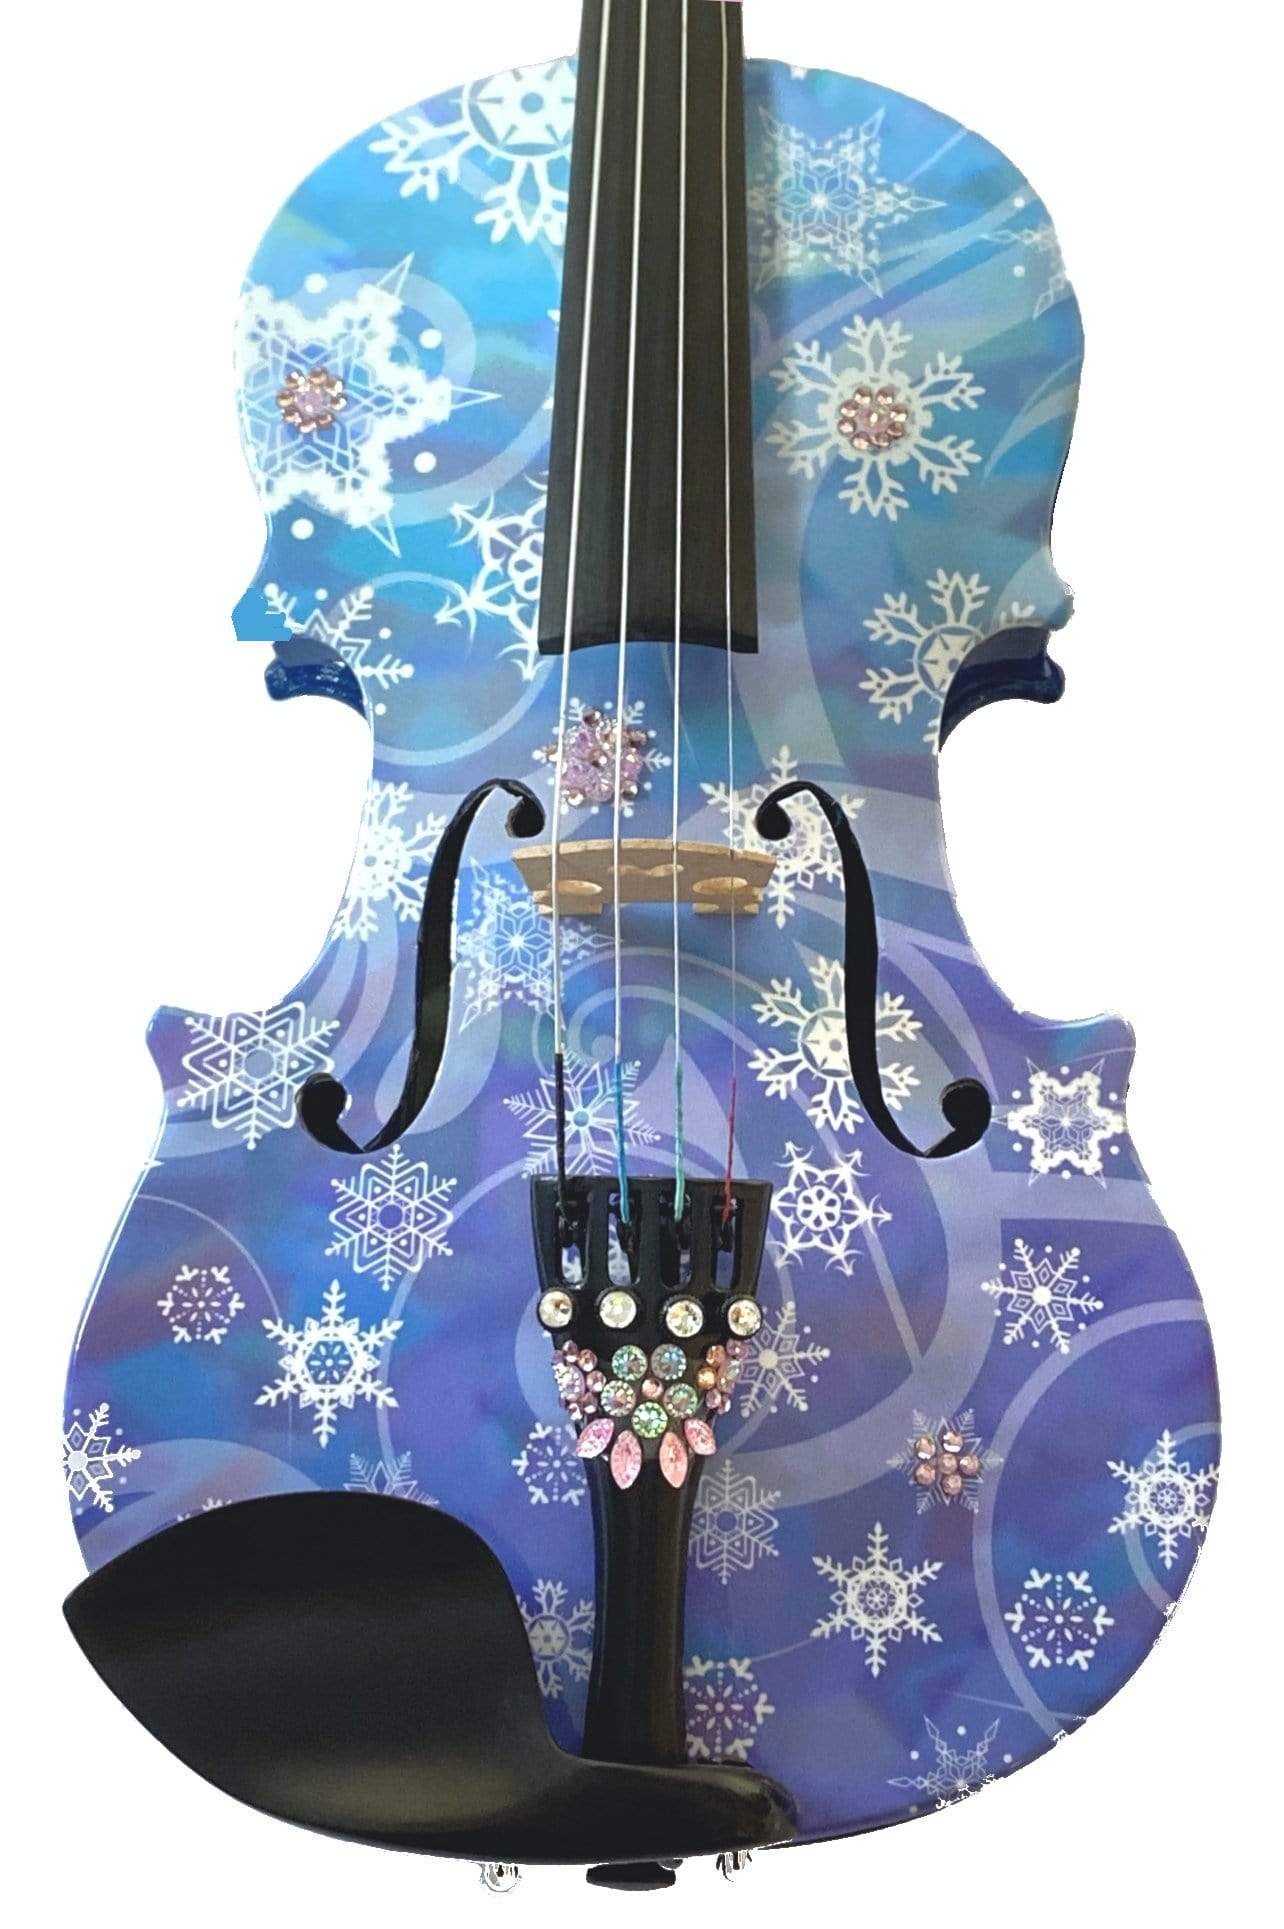 Rozanna's Violins Snowflake Bling Violin Outfit